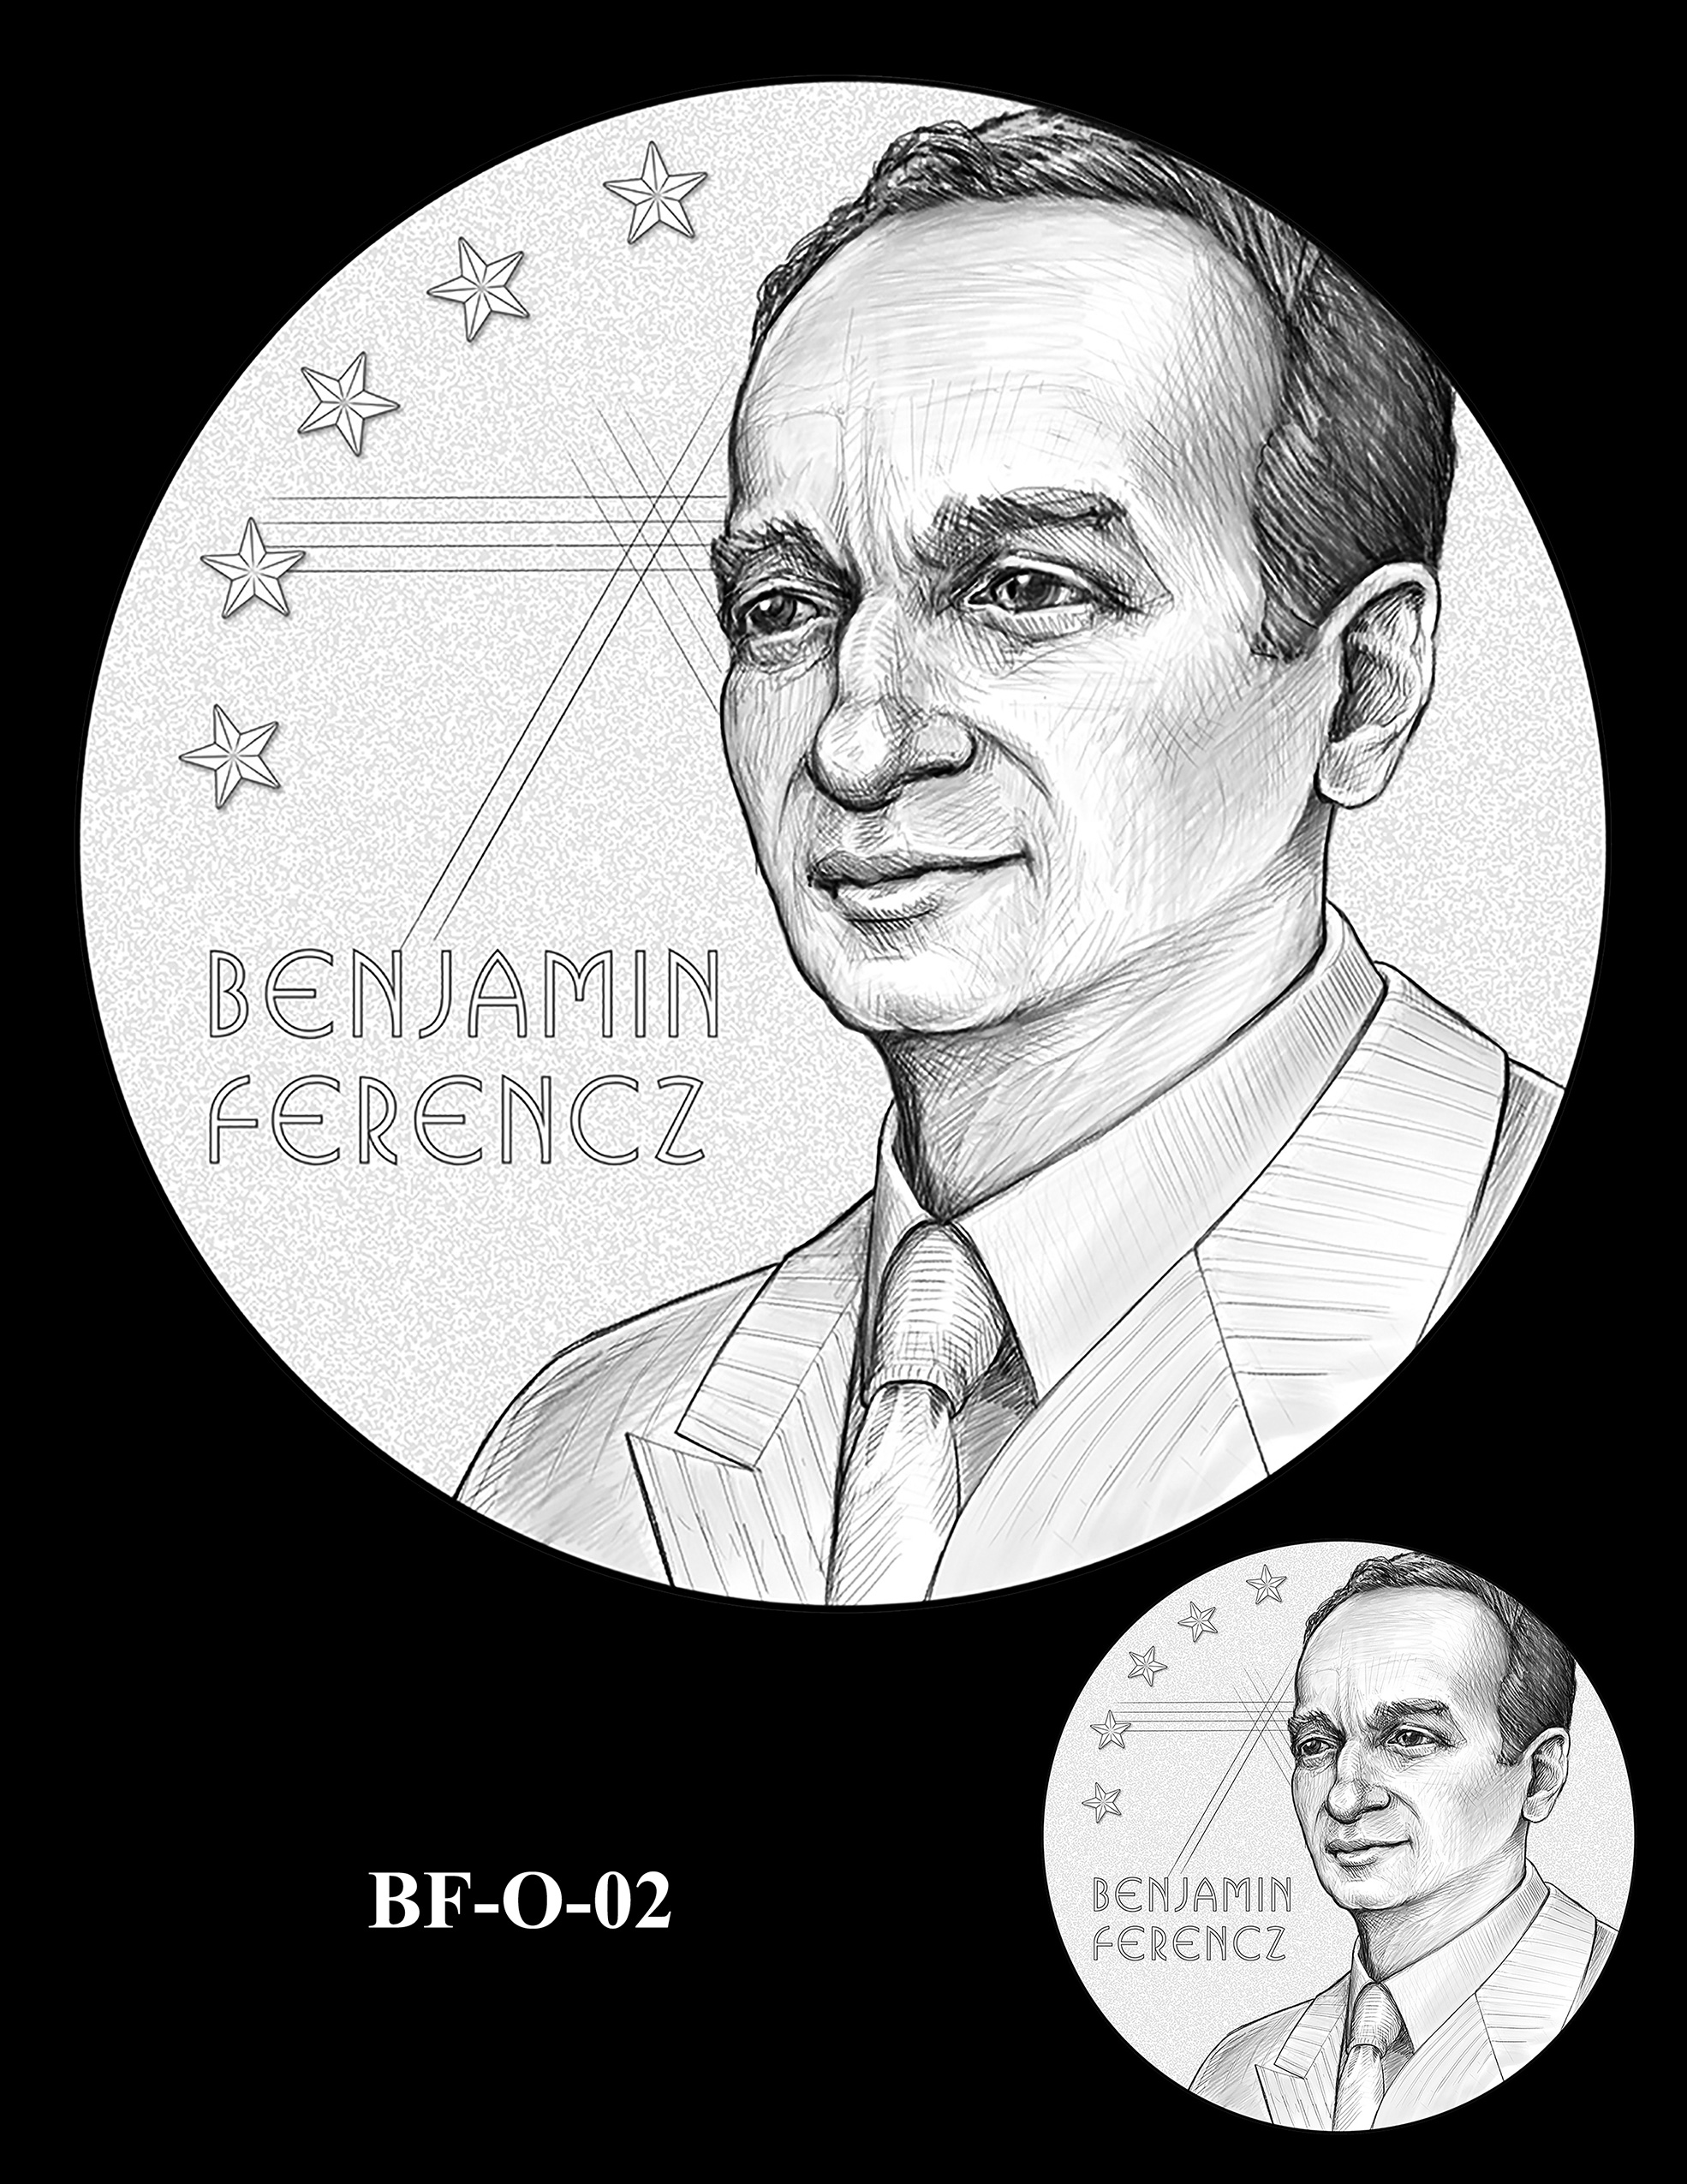 BF-O-02 -- Benjamin Ferencz Congressional Gold Medal